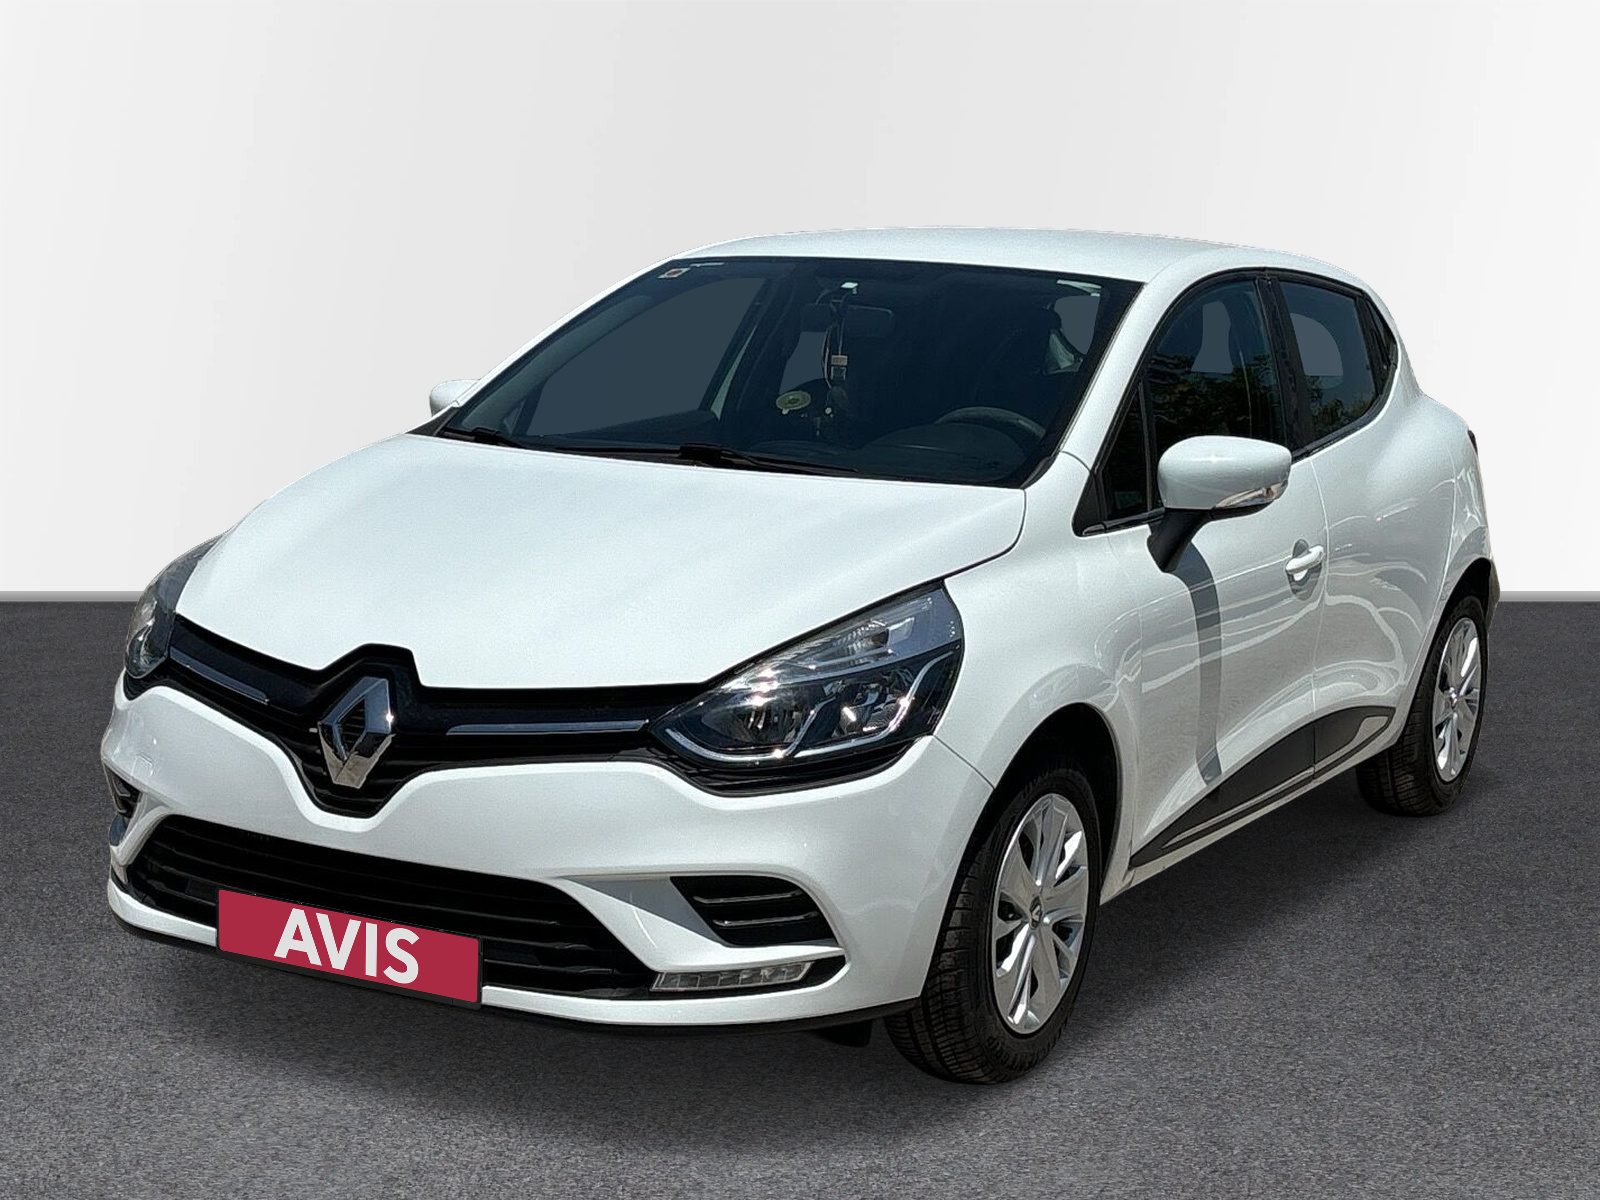 AVIS Used Car | Renault Clio 1.5 dCi 90 Expression S/S